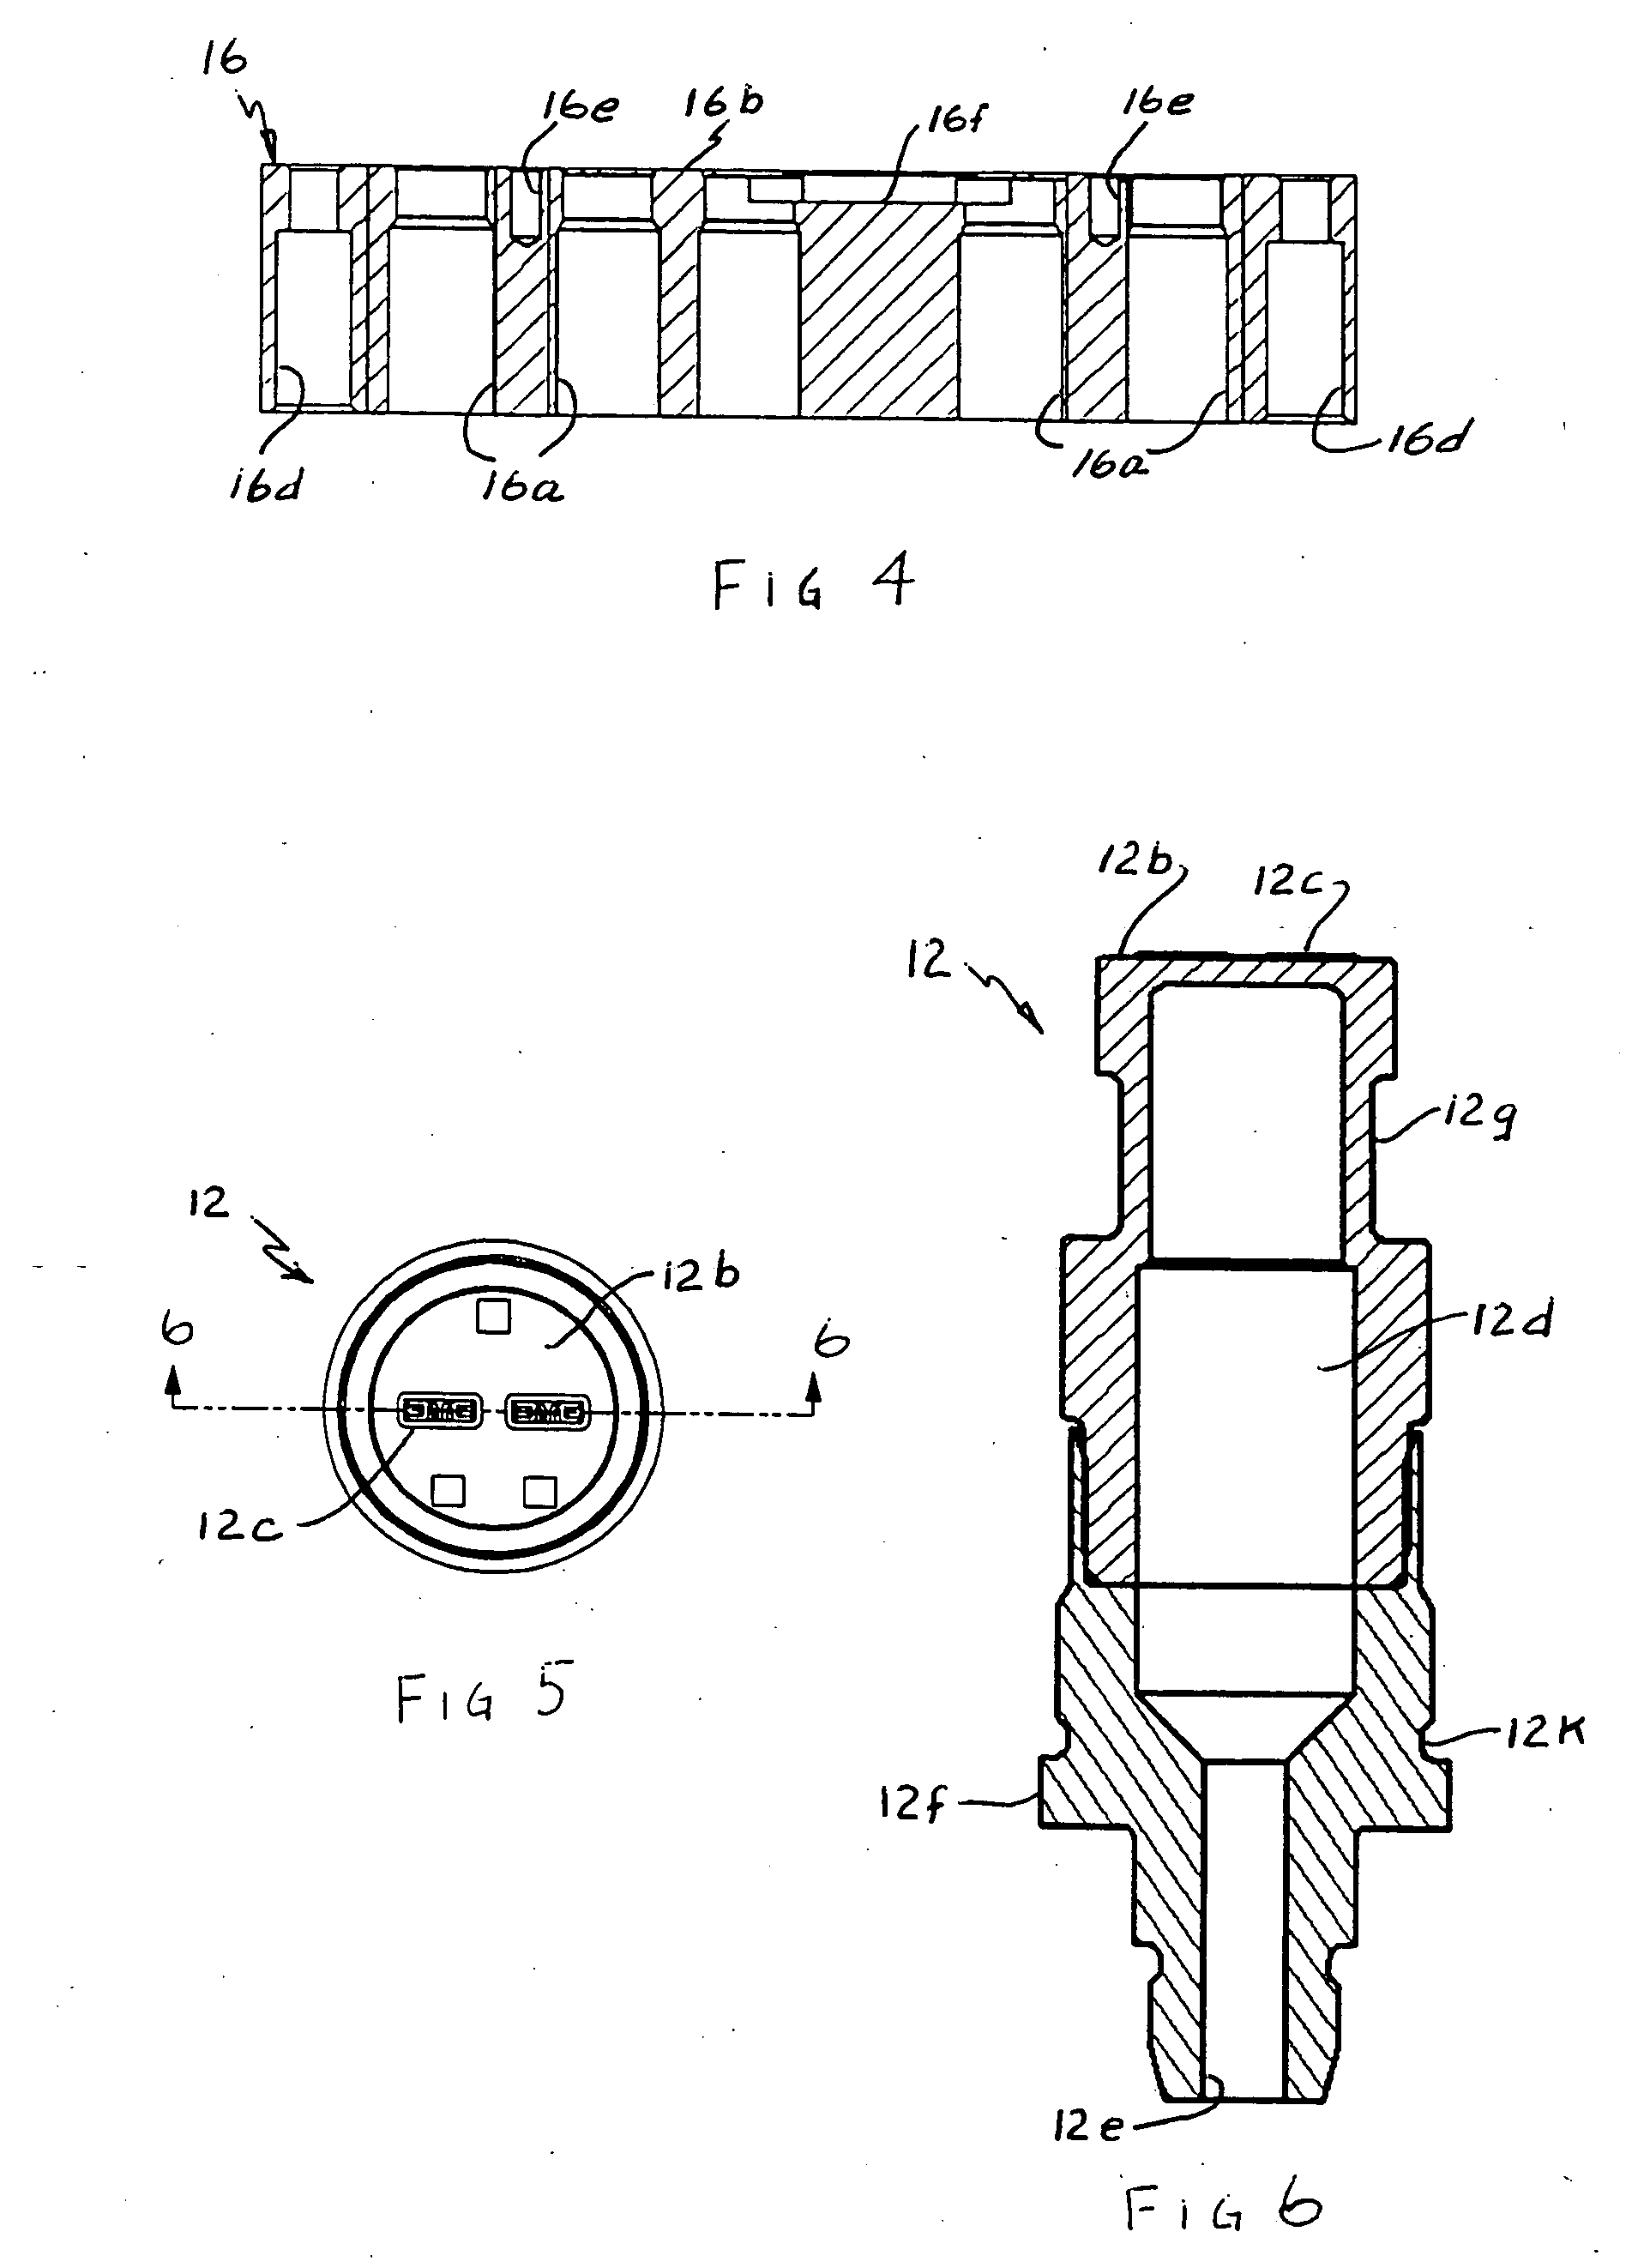 Multi-channel pressure sensing apparatus